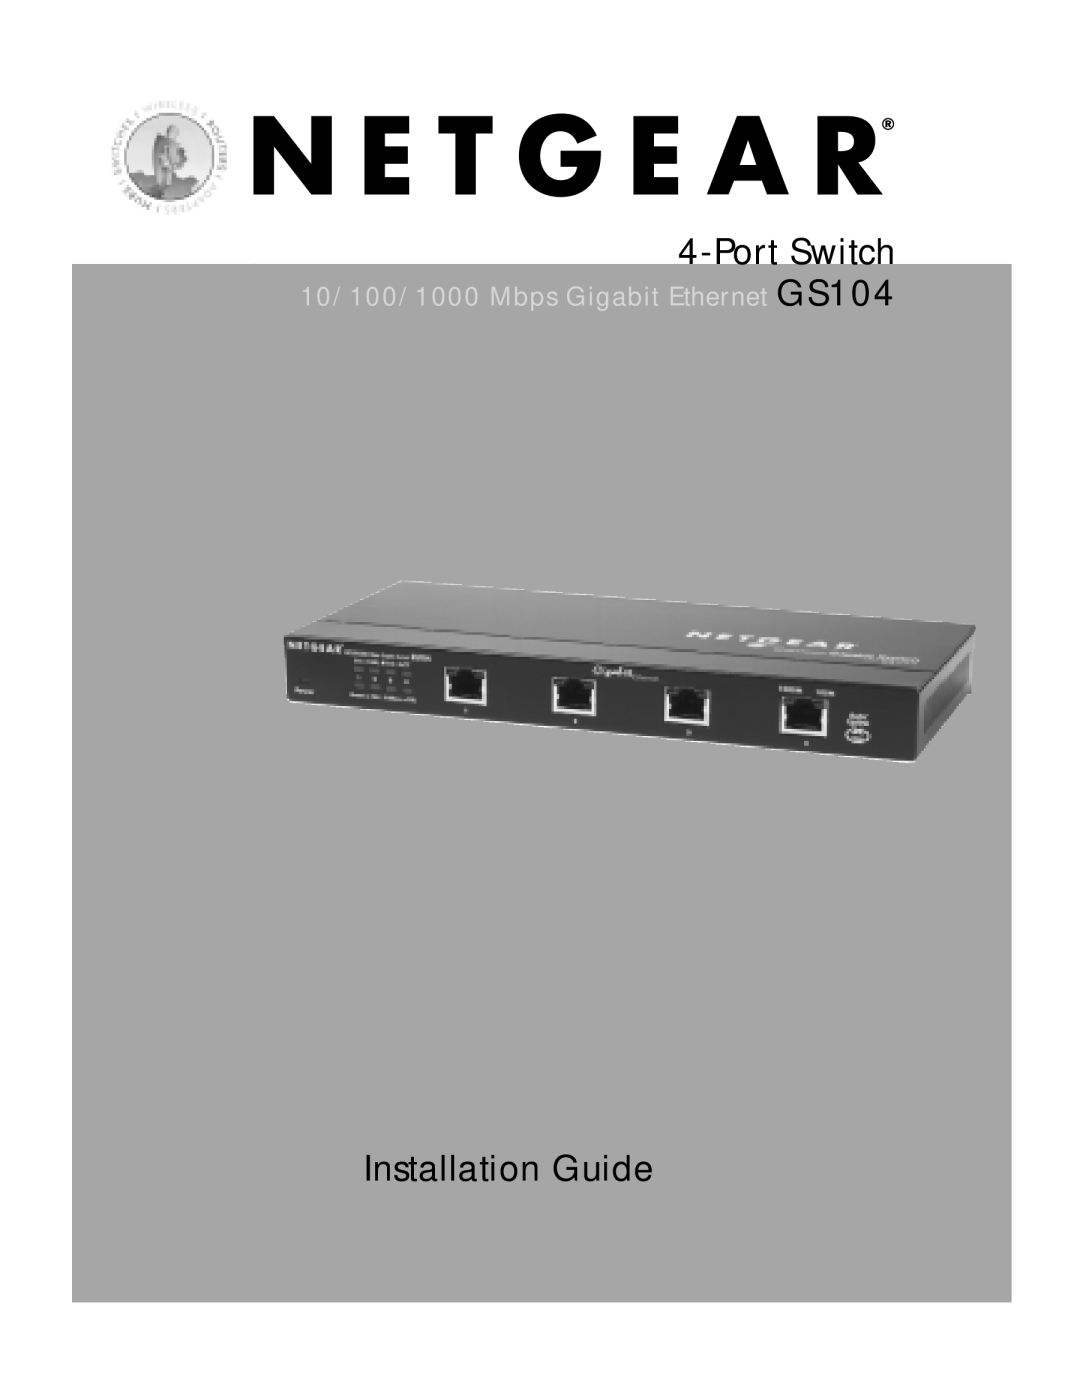 NETGEAR manual Port Switch, Installation Guide, 10/100/1000 Mbps Gigabit Ethernet GS104 